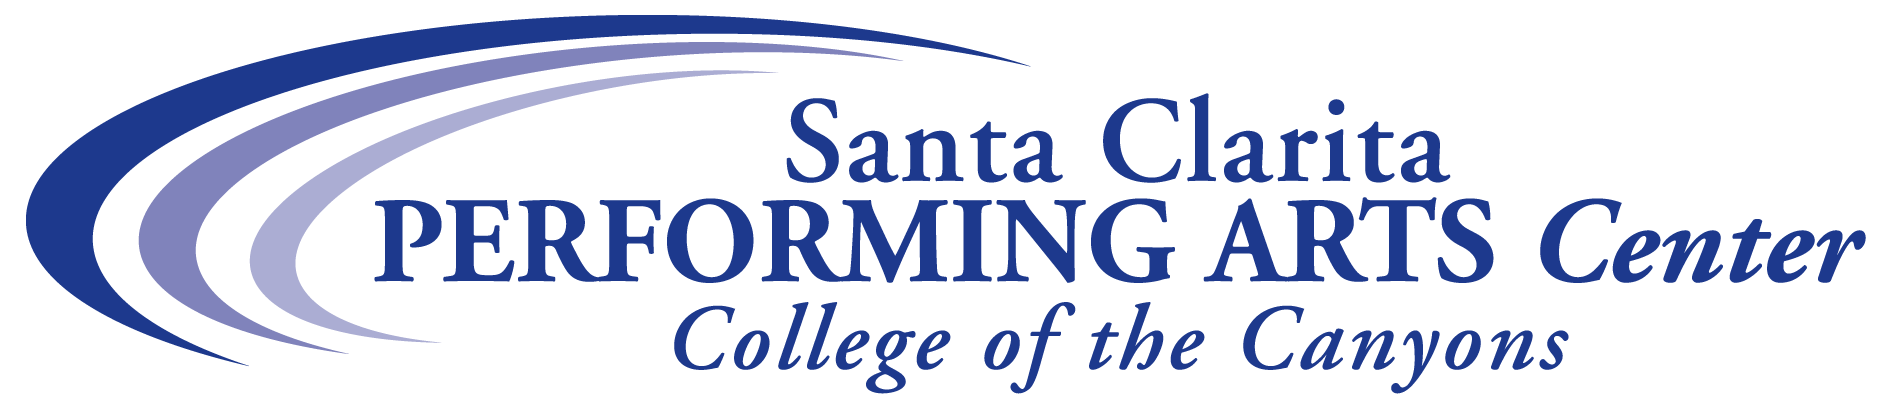 Santa Clarita Performing Arts Center logo